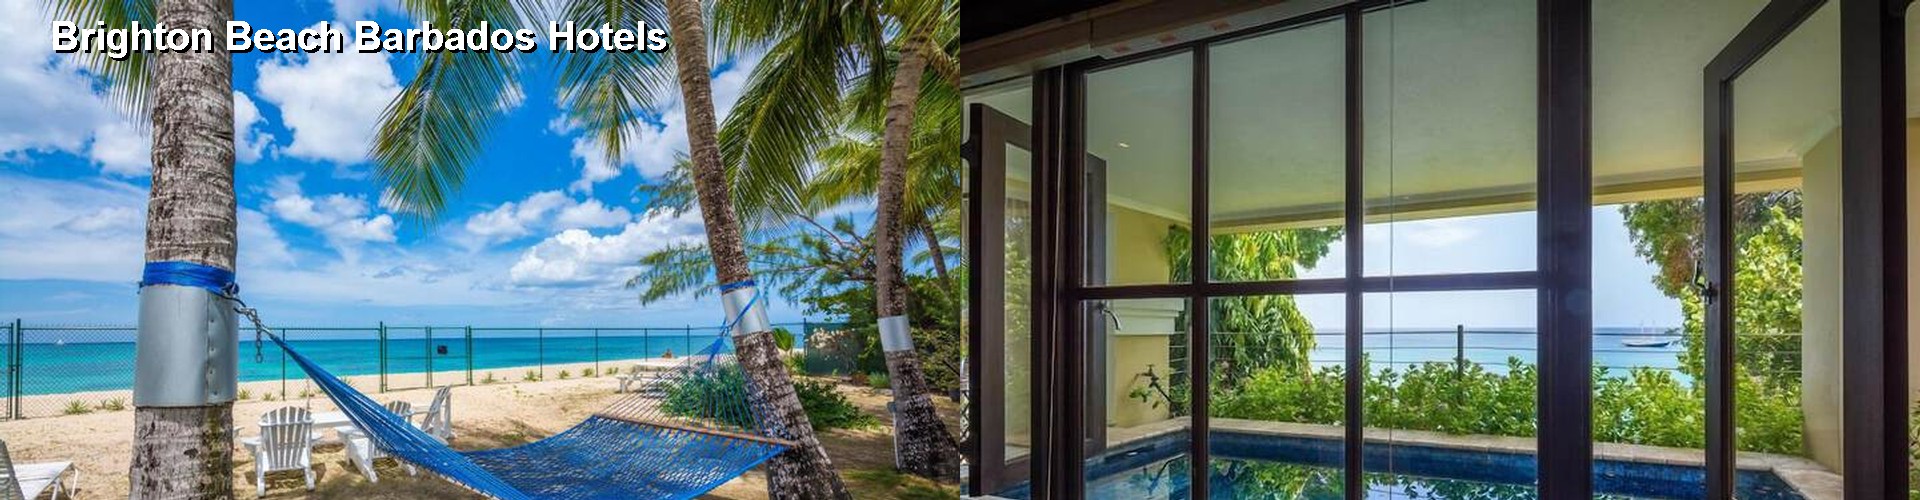 4 Best Hotels near Brighton Beach Barbados